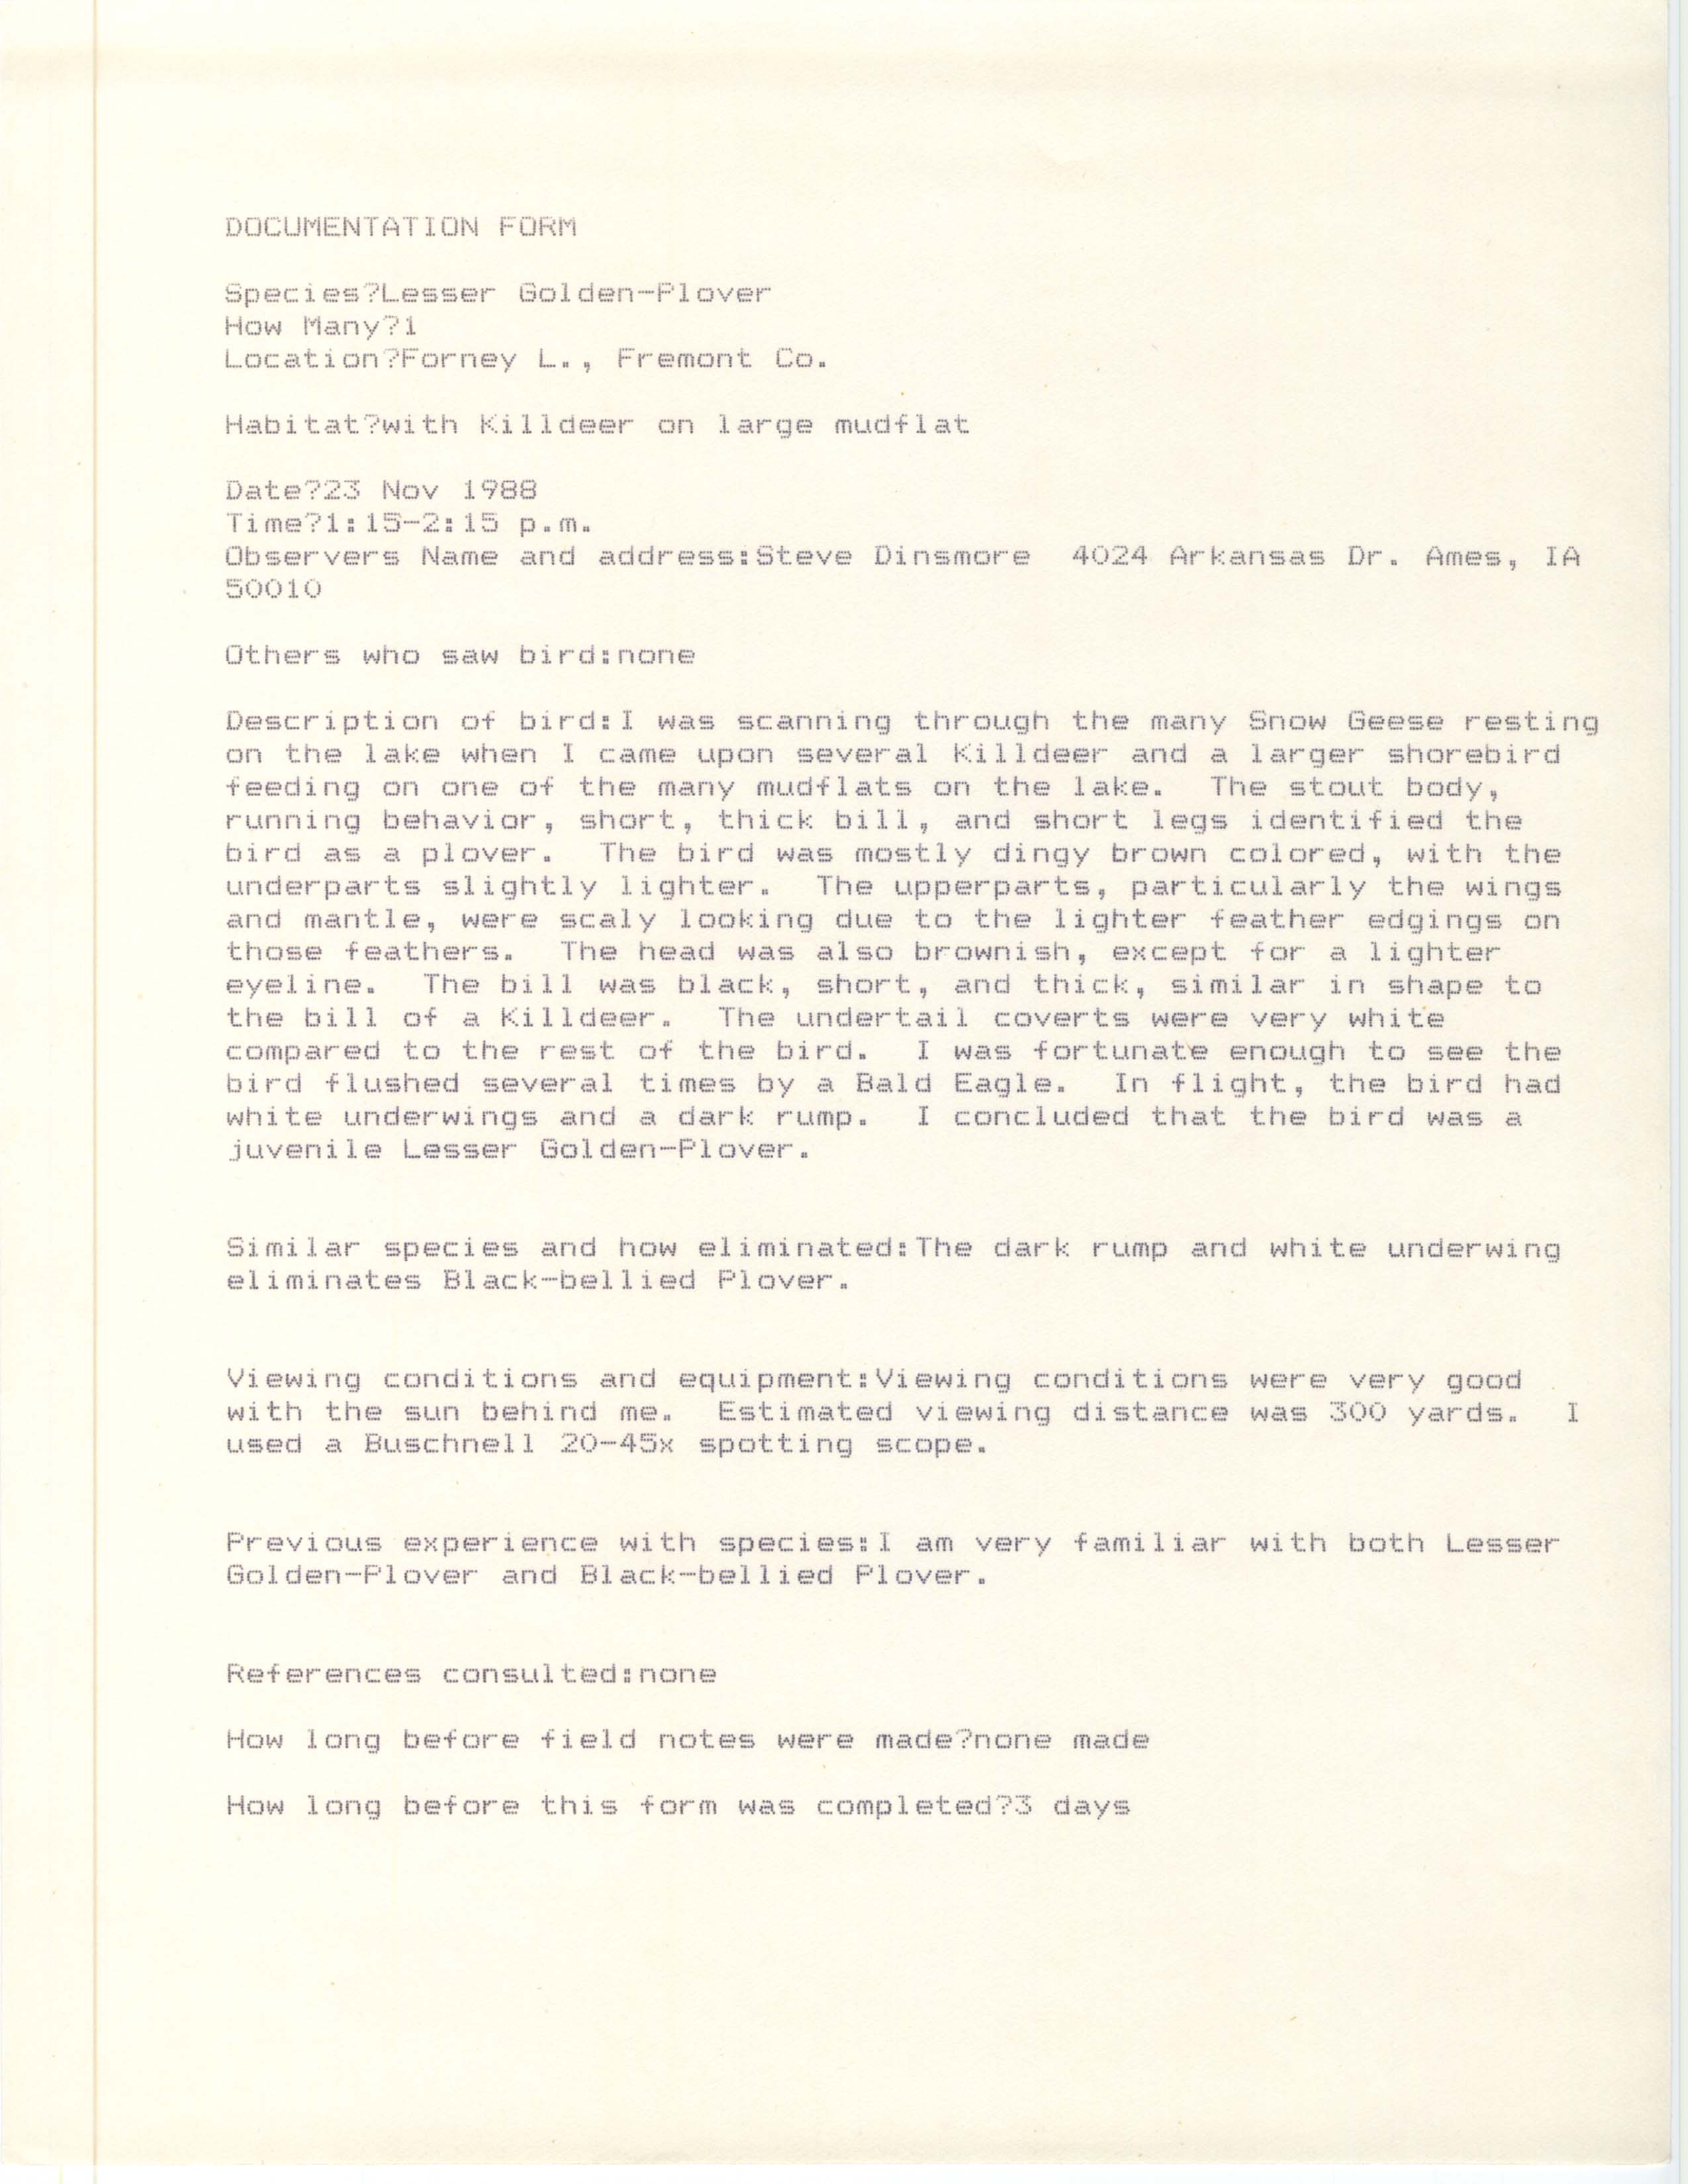 Rare bird documentation form for Lesser Golden-Plover at Forney Lake, 1988